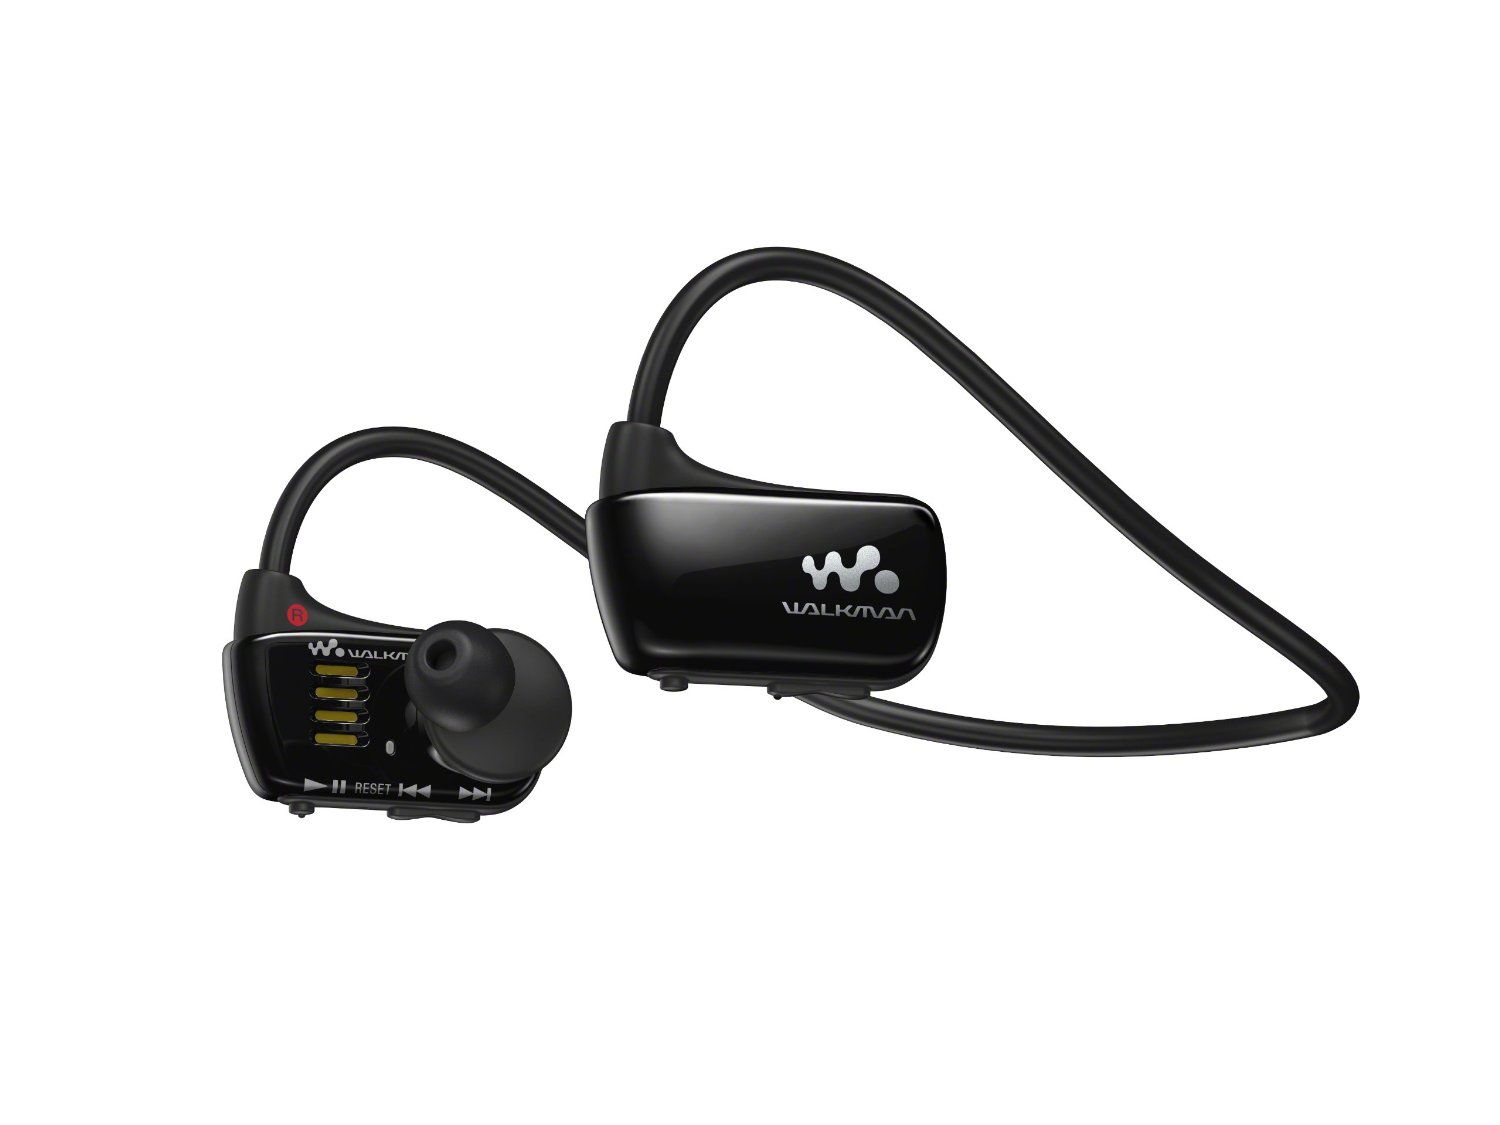 NWZW273S 4 GB Waterproof Sports MP3 Player (Black)